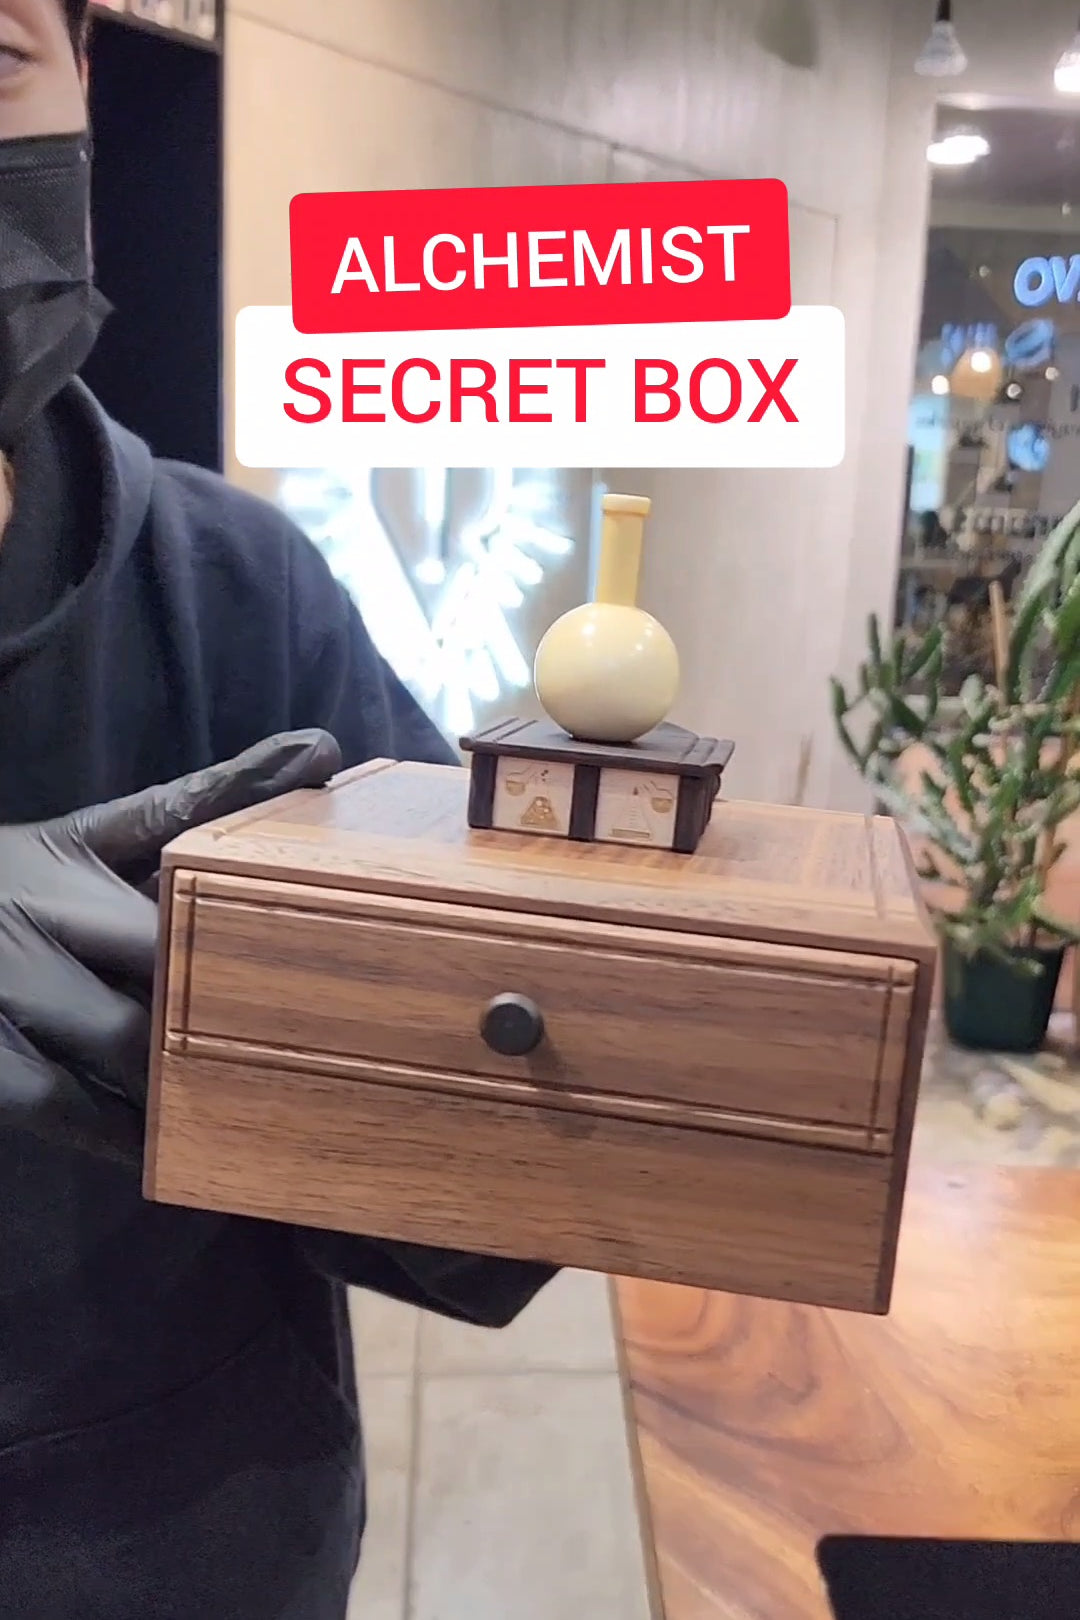 How to open the Alchemist Secret Box